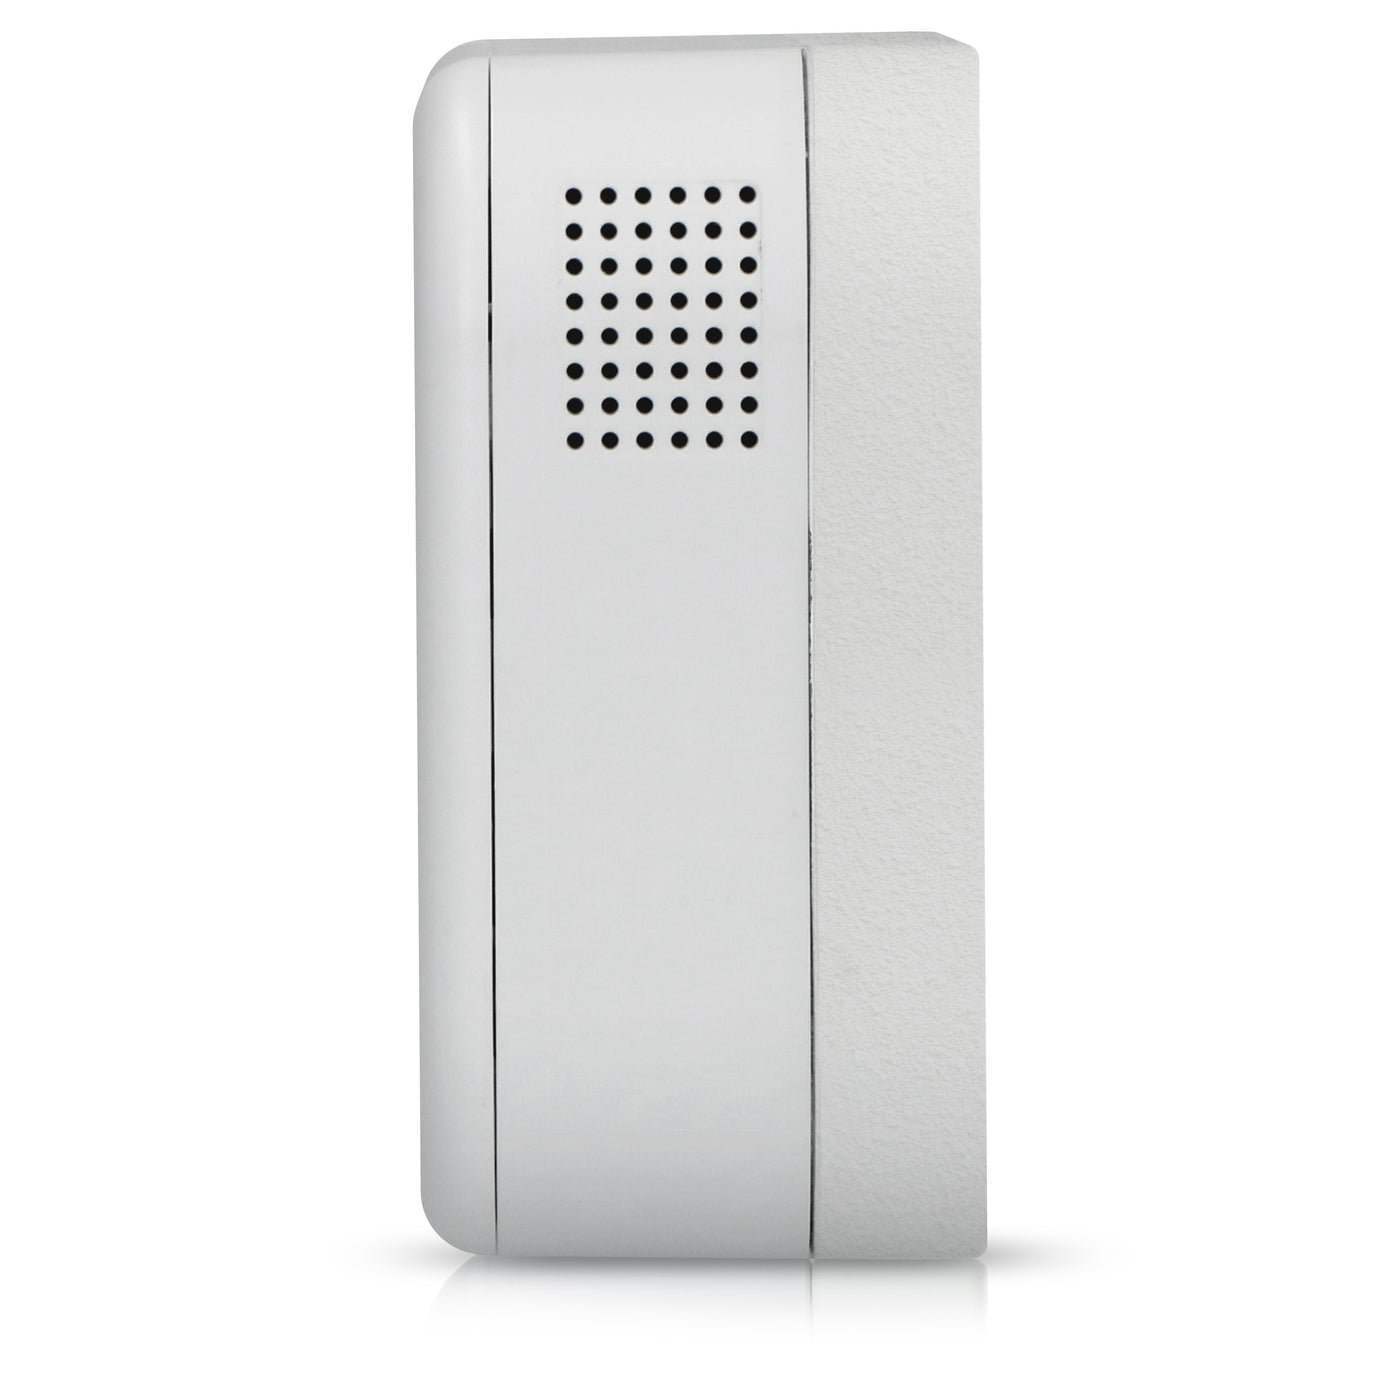 Alecto COA3910 - Carbon monoxide alarm with 10 year sensor runtime and display